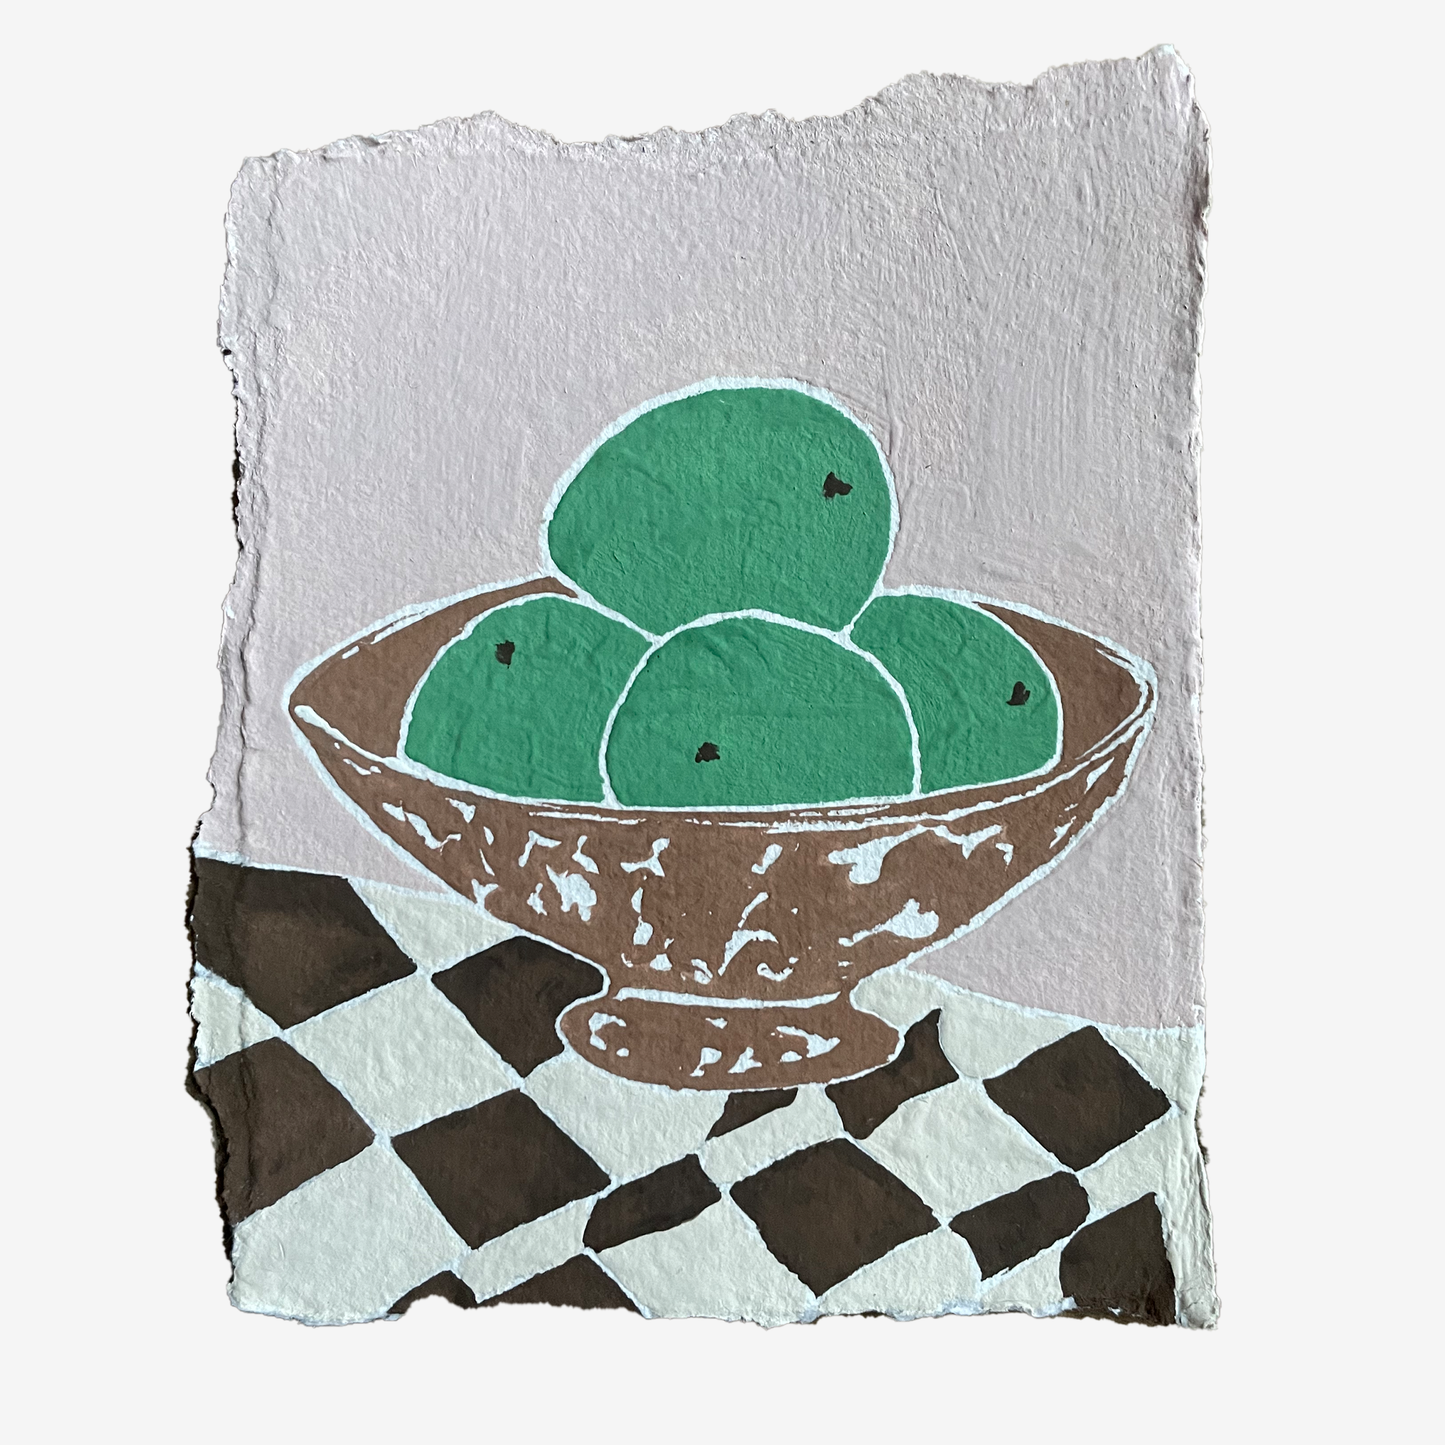 'The Kiwi Bowl' by Grace Percival 2023